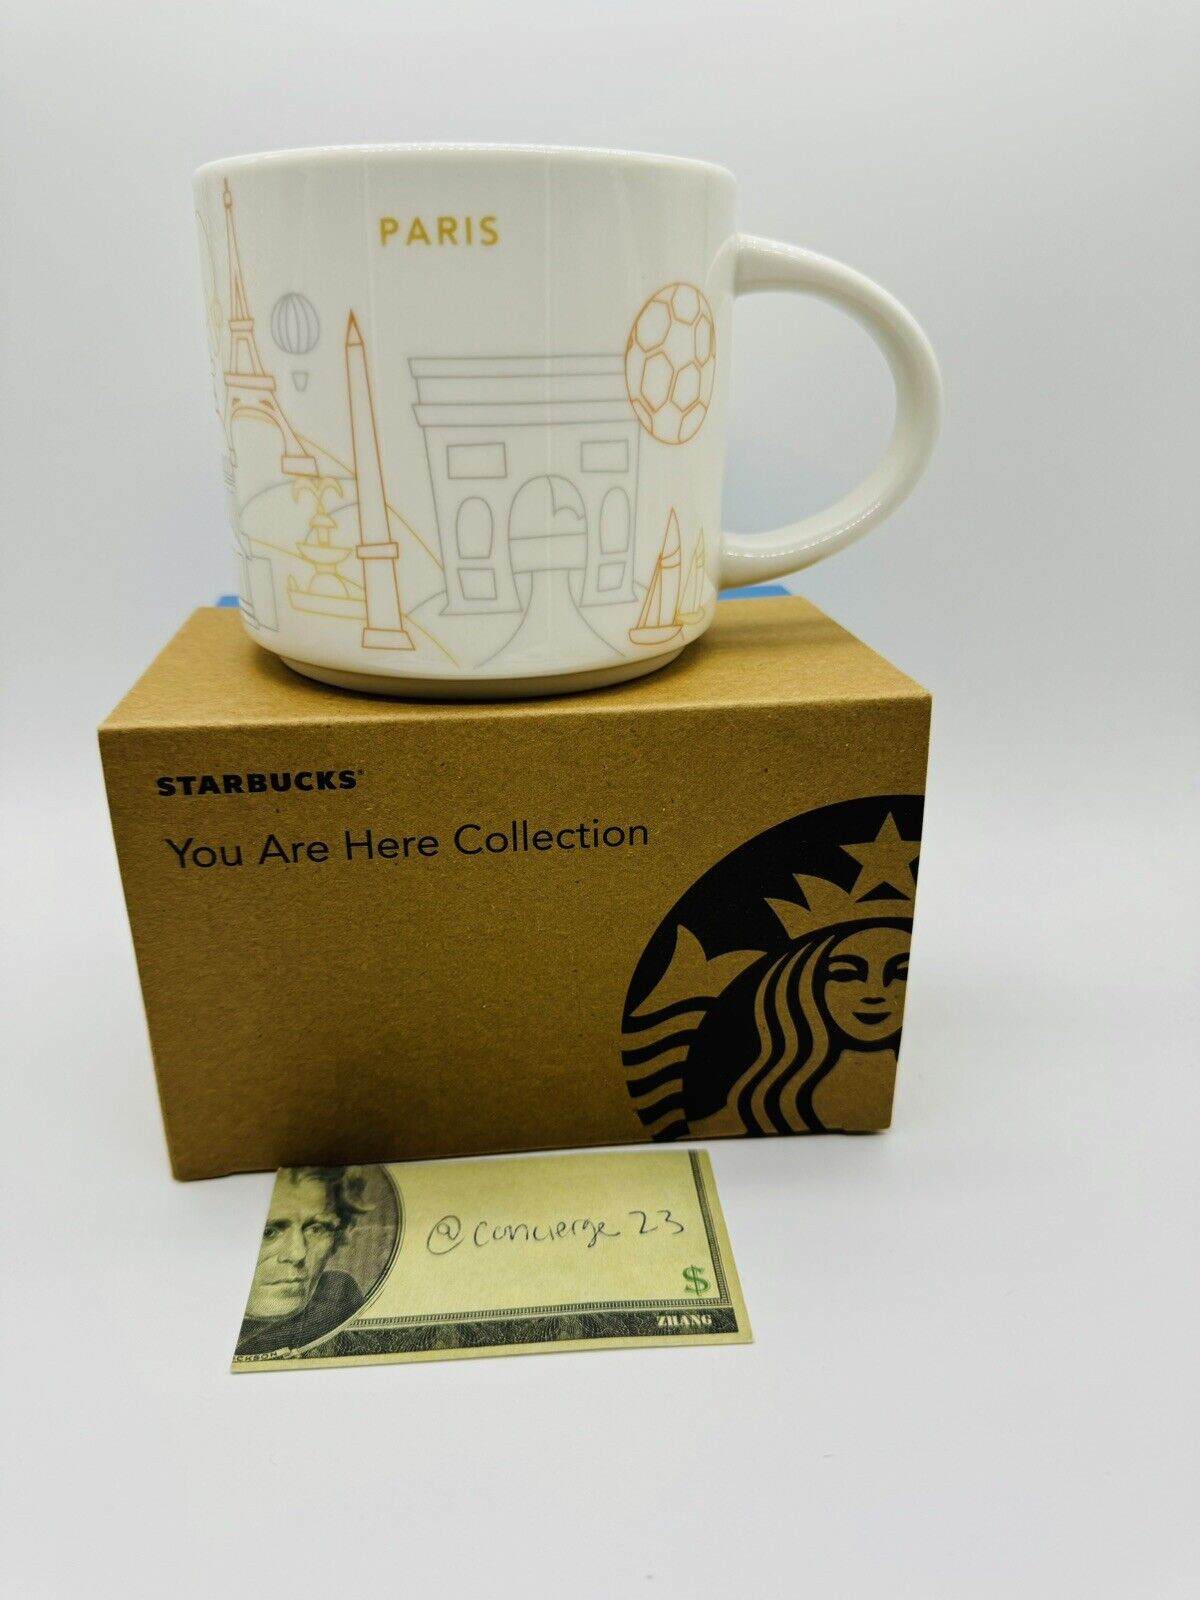 NIB Starbucks Paris Olympic Games You are Here Limited Edition Mug -  USA Seller